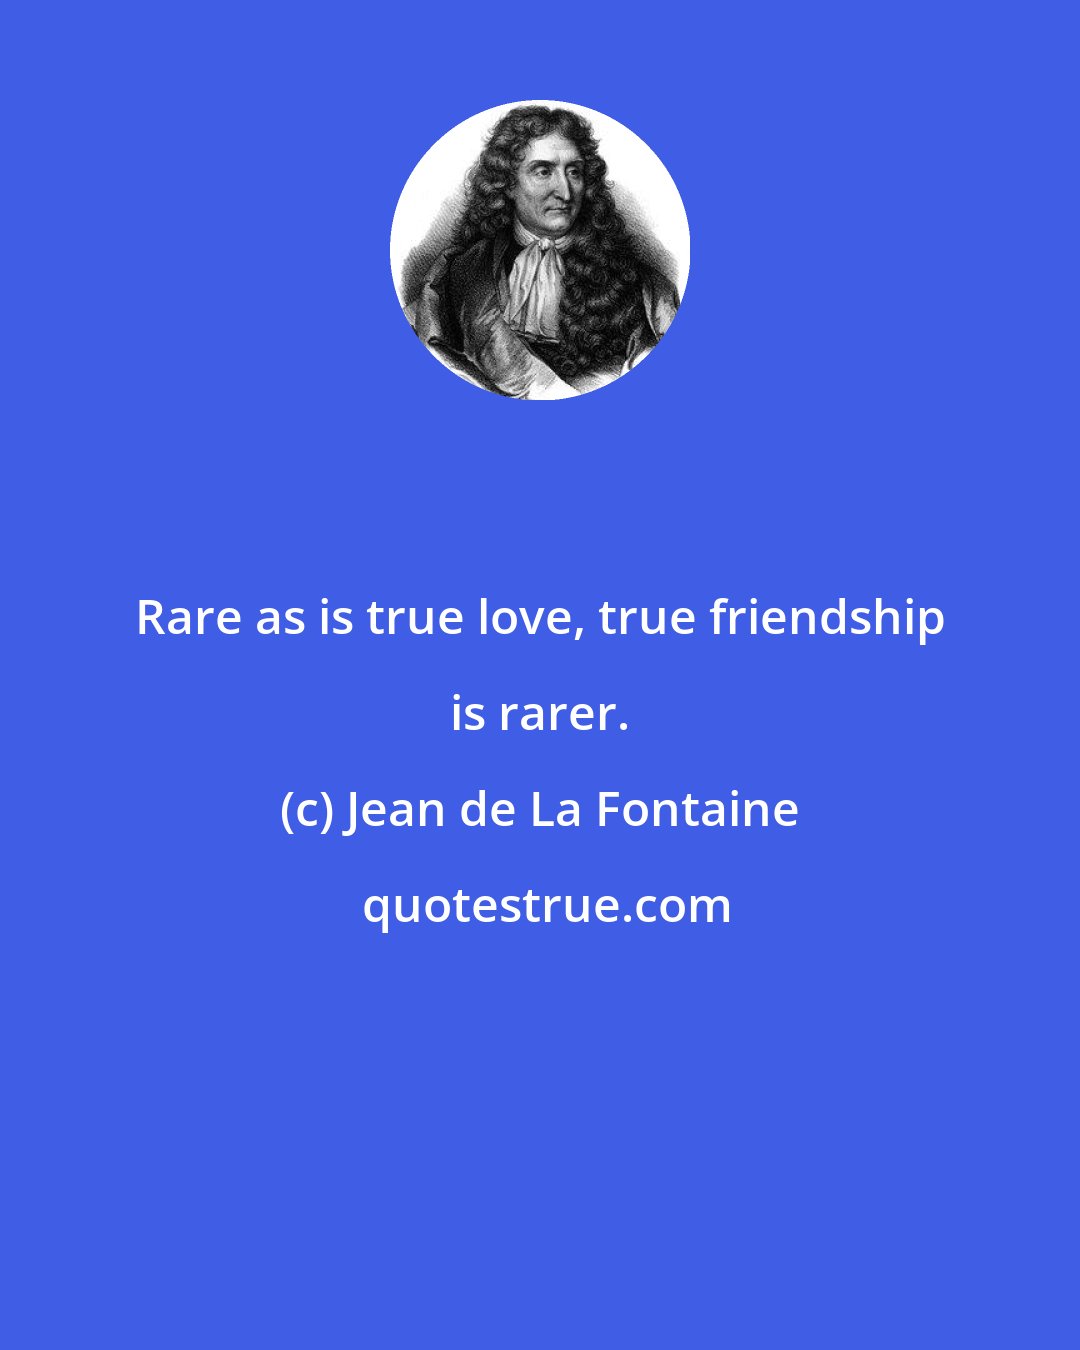 Jean de La Fontaine: Rare as is true love, true friendship is rarer.